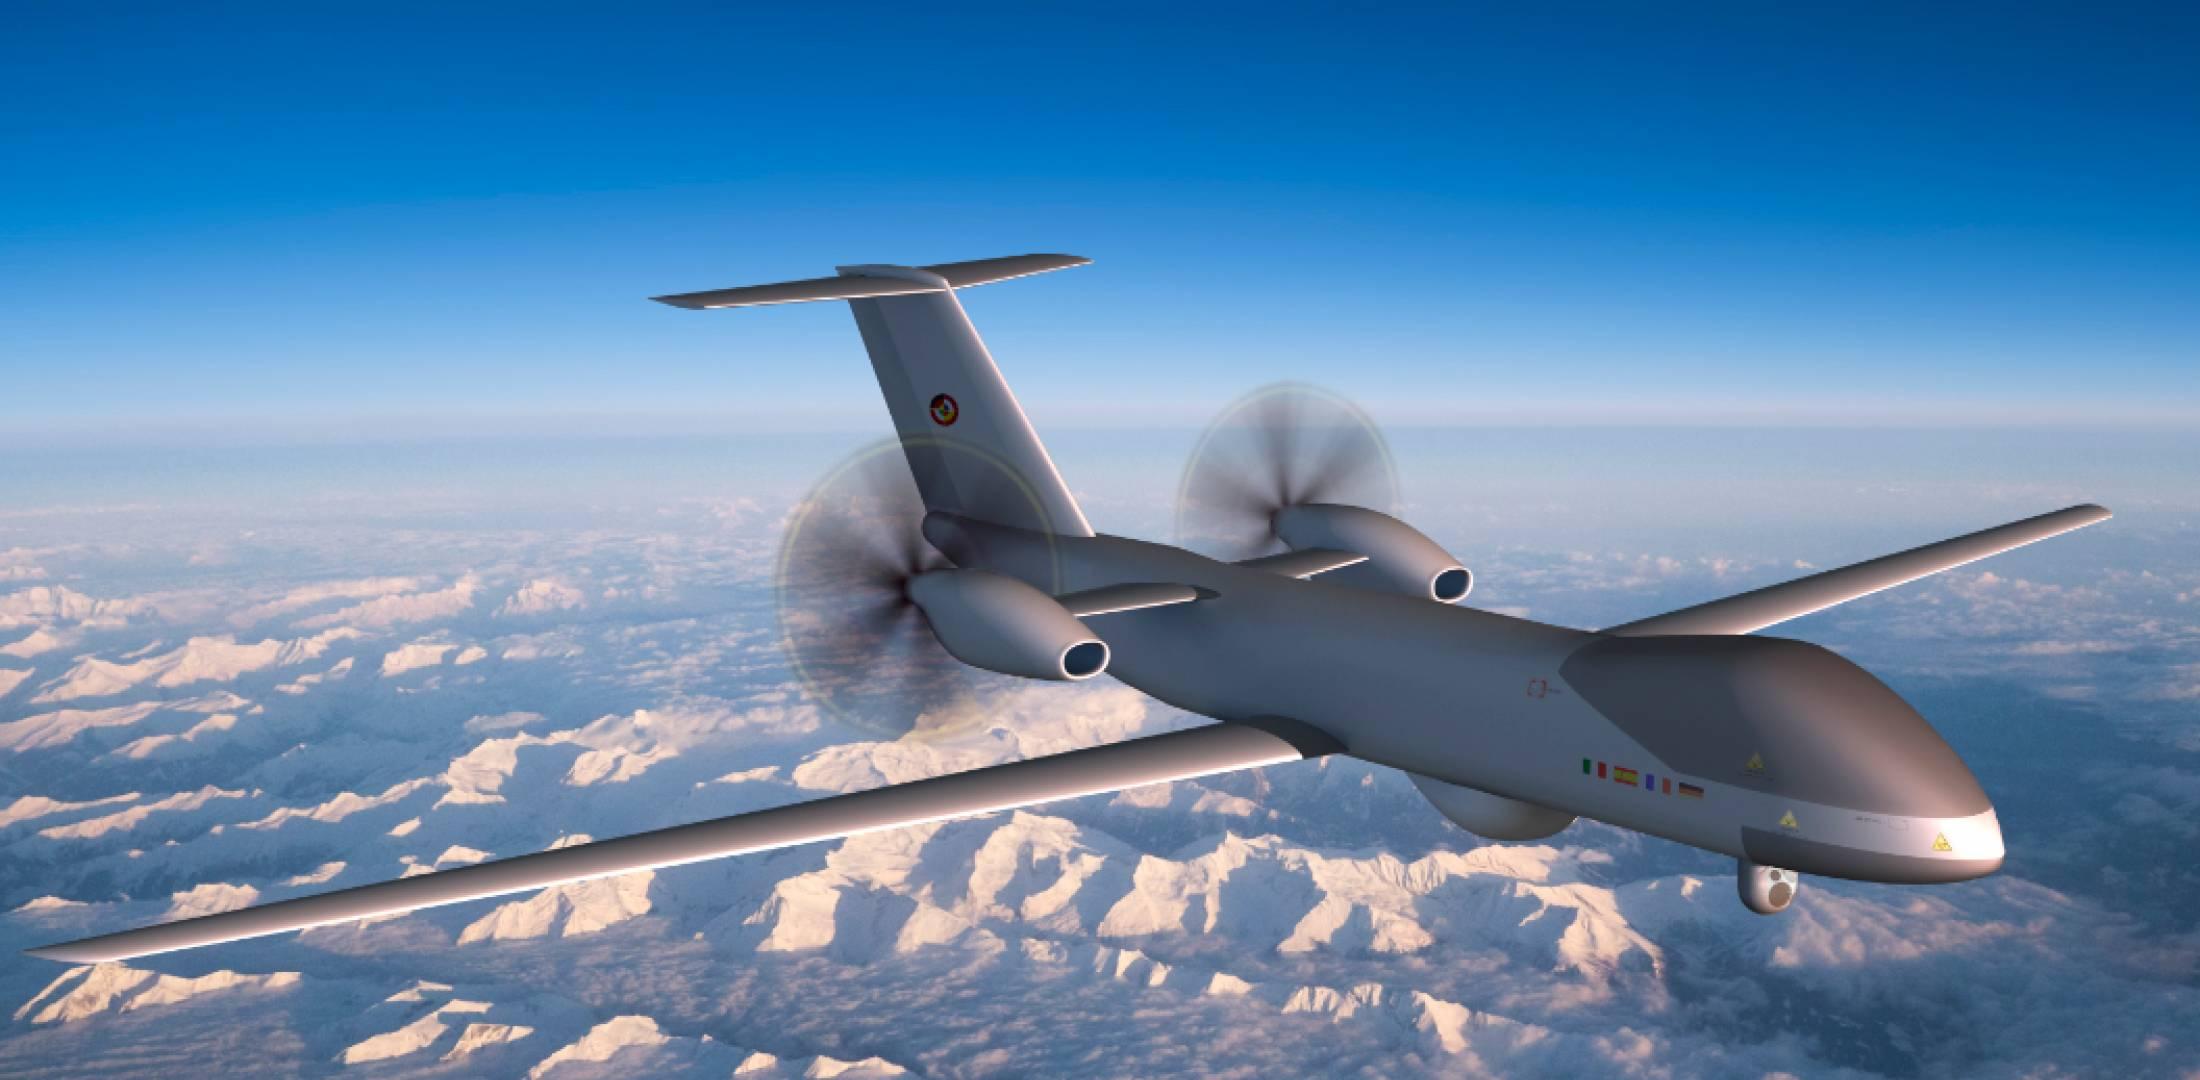 EuroDrone medium-altitude, long-endurance UAV